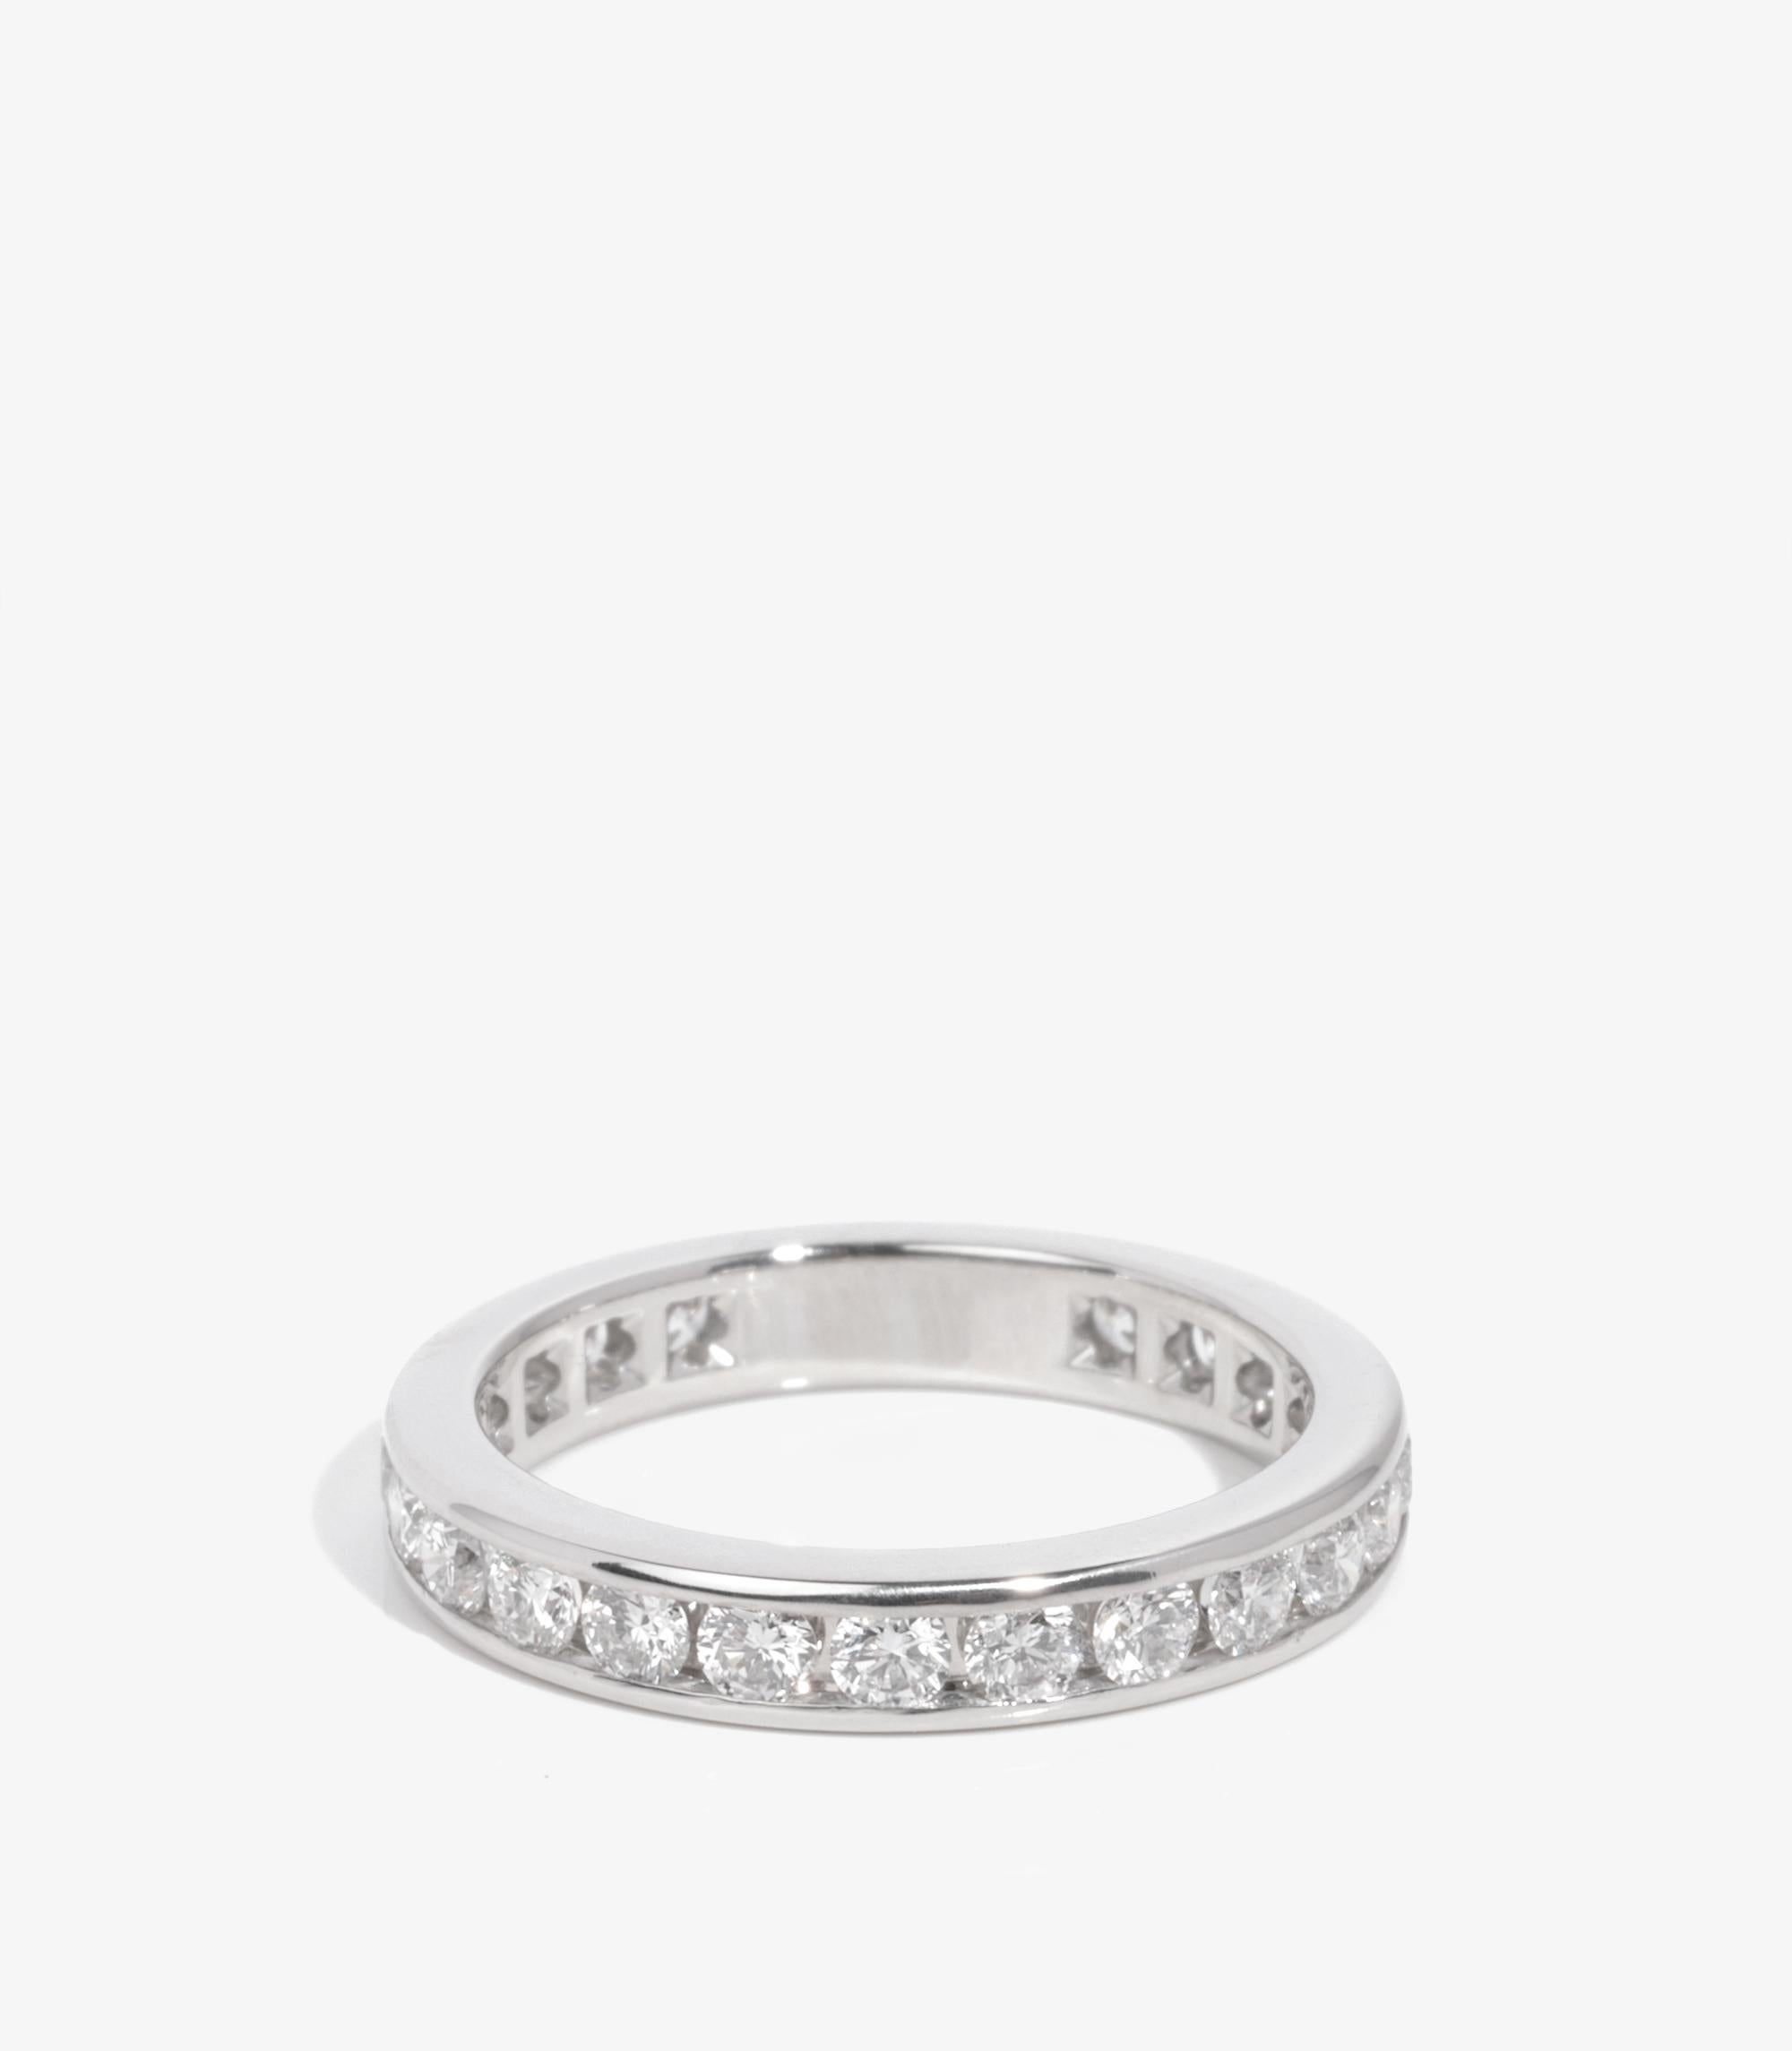 Tiffany & Co. Brilliant Cut Diamond Platinum Full Eternity Ring

Brand- Tiffany & Co.
Model- Full Eternity Ring
Product Type- Ring
Material(s)- Platinum
Gemstone- Diamond
UK Ring Size- I
EU Ring Size- 48
US Ring Size- 4 1/4
Resizing Possible-